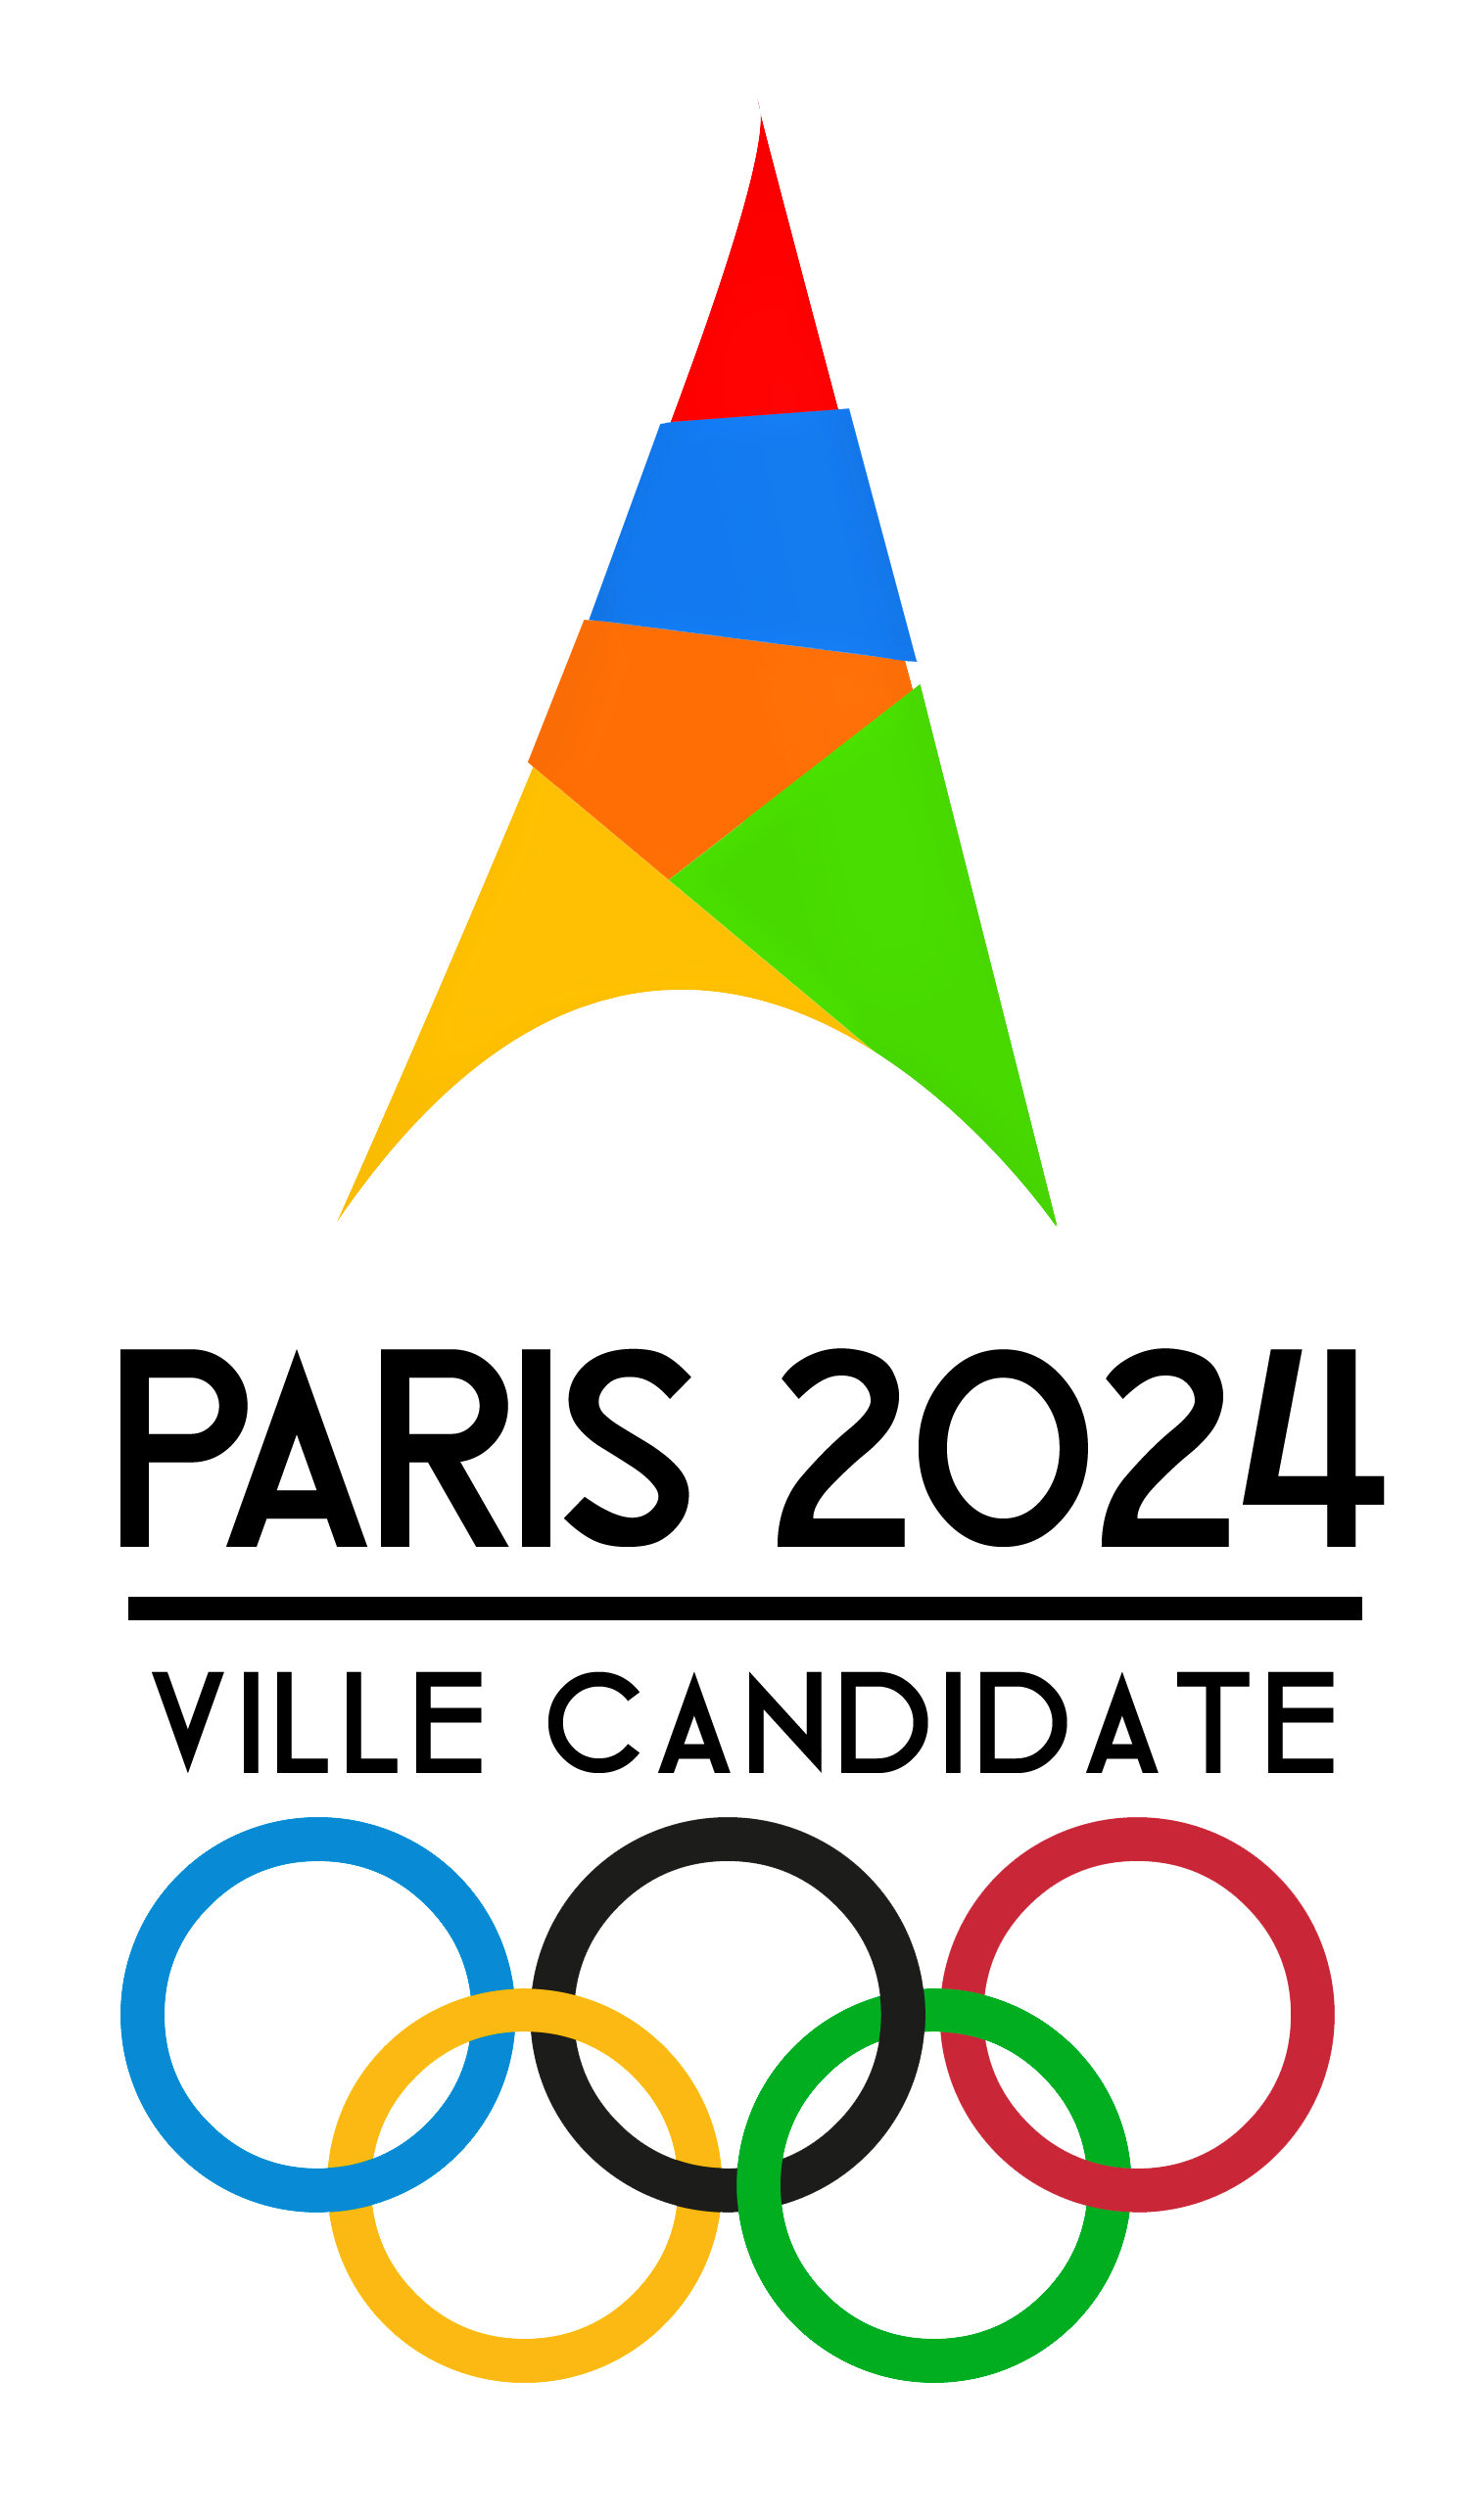 Лого 2024 года. Олимпийские игры в Париже 2024. Олимпийских игр–2024 в Париже лого. Летние Олимпийские игры 2024 логотип.